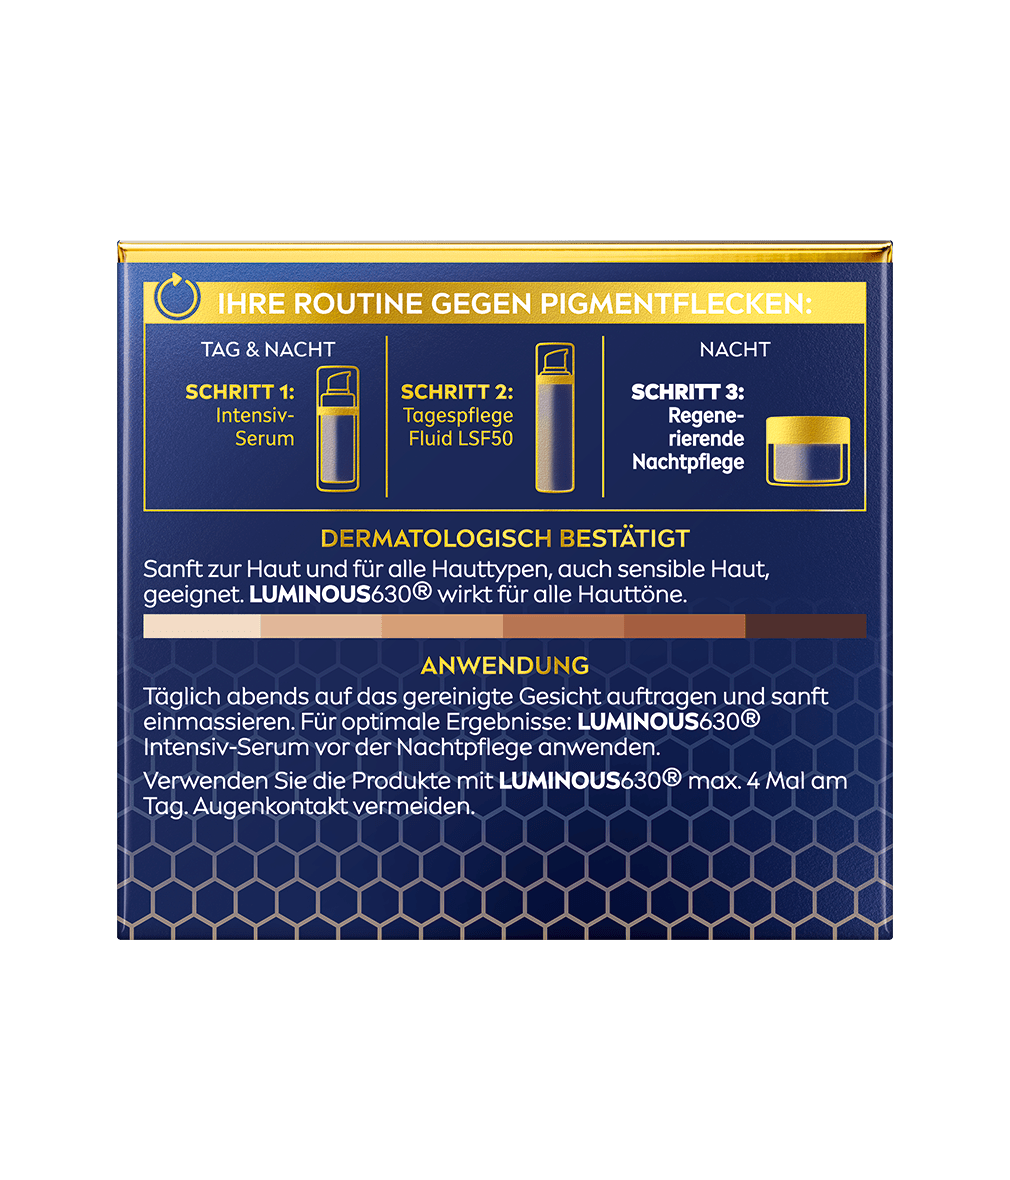 NIVEA Cellular Luminous630 Regenerierende Nachtpflege